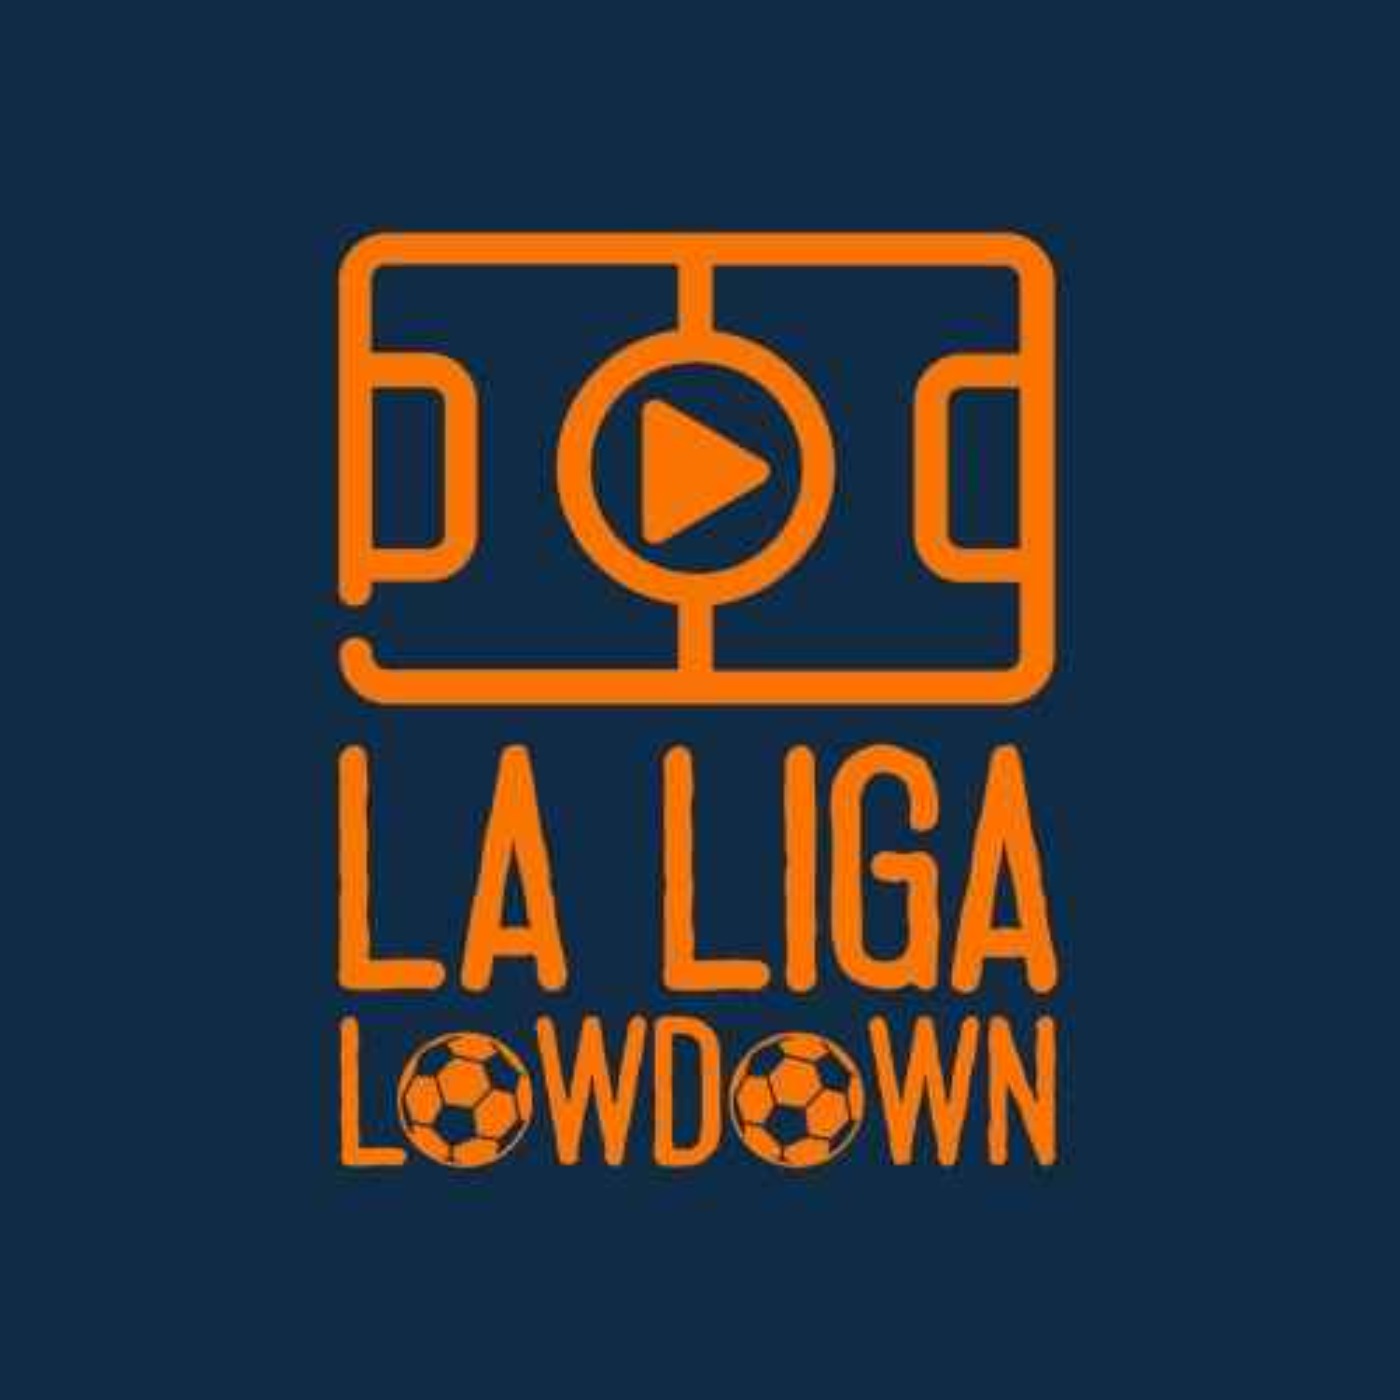 Ánimo Cádiz as everything is decided: LaLiga matchday 37 recap